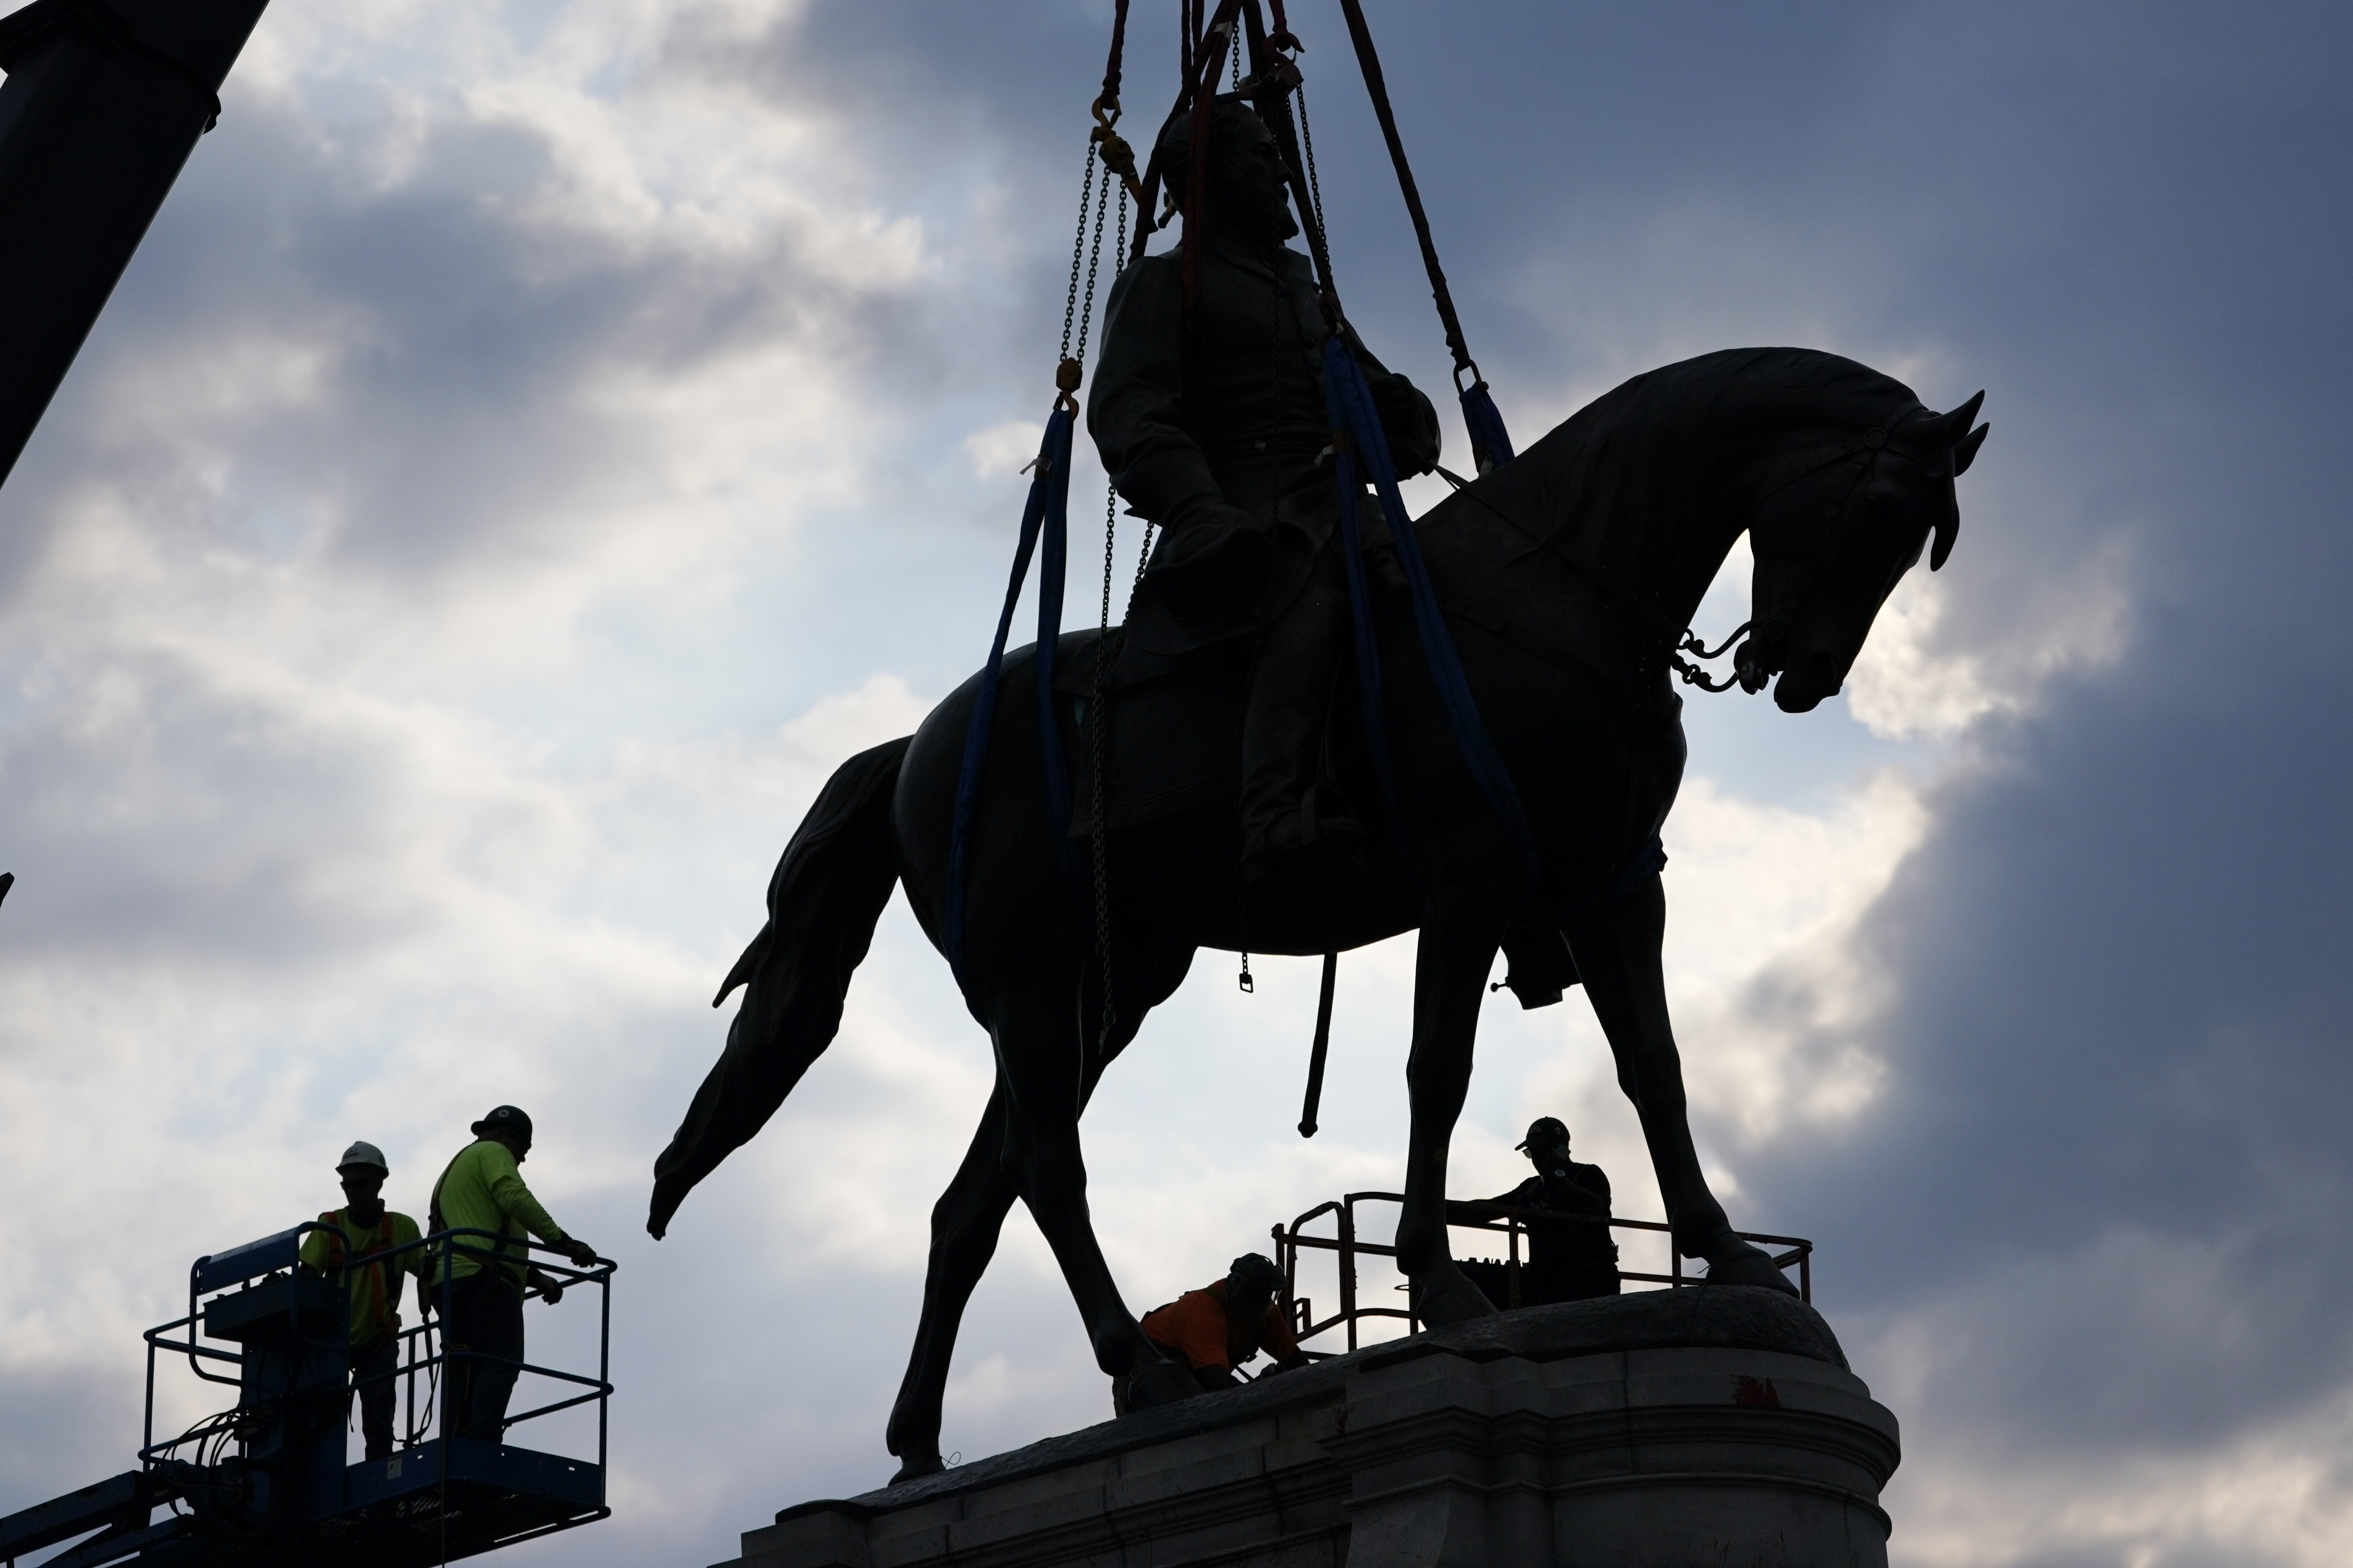 Richmond's massive Robert E. Lee statue removed from pedestal, cut 